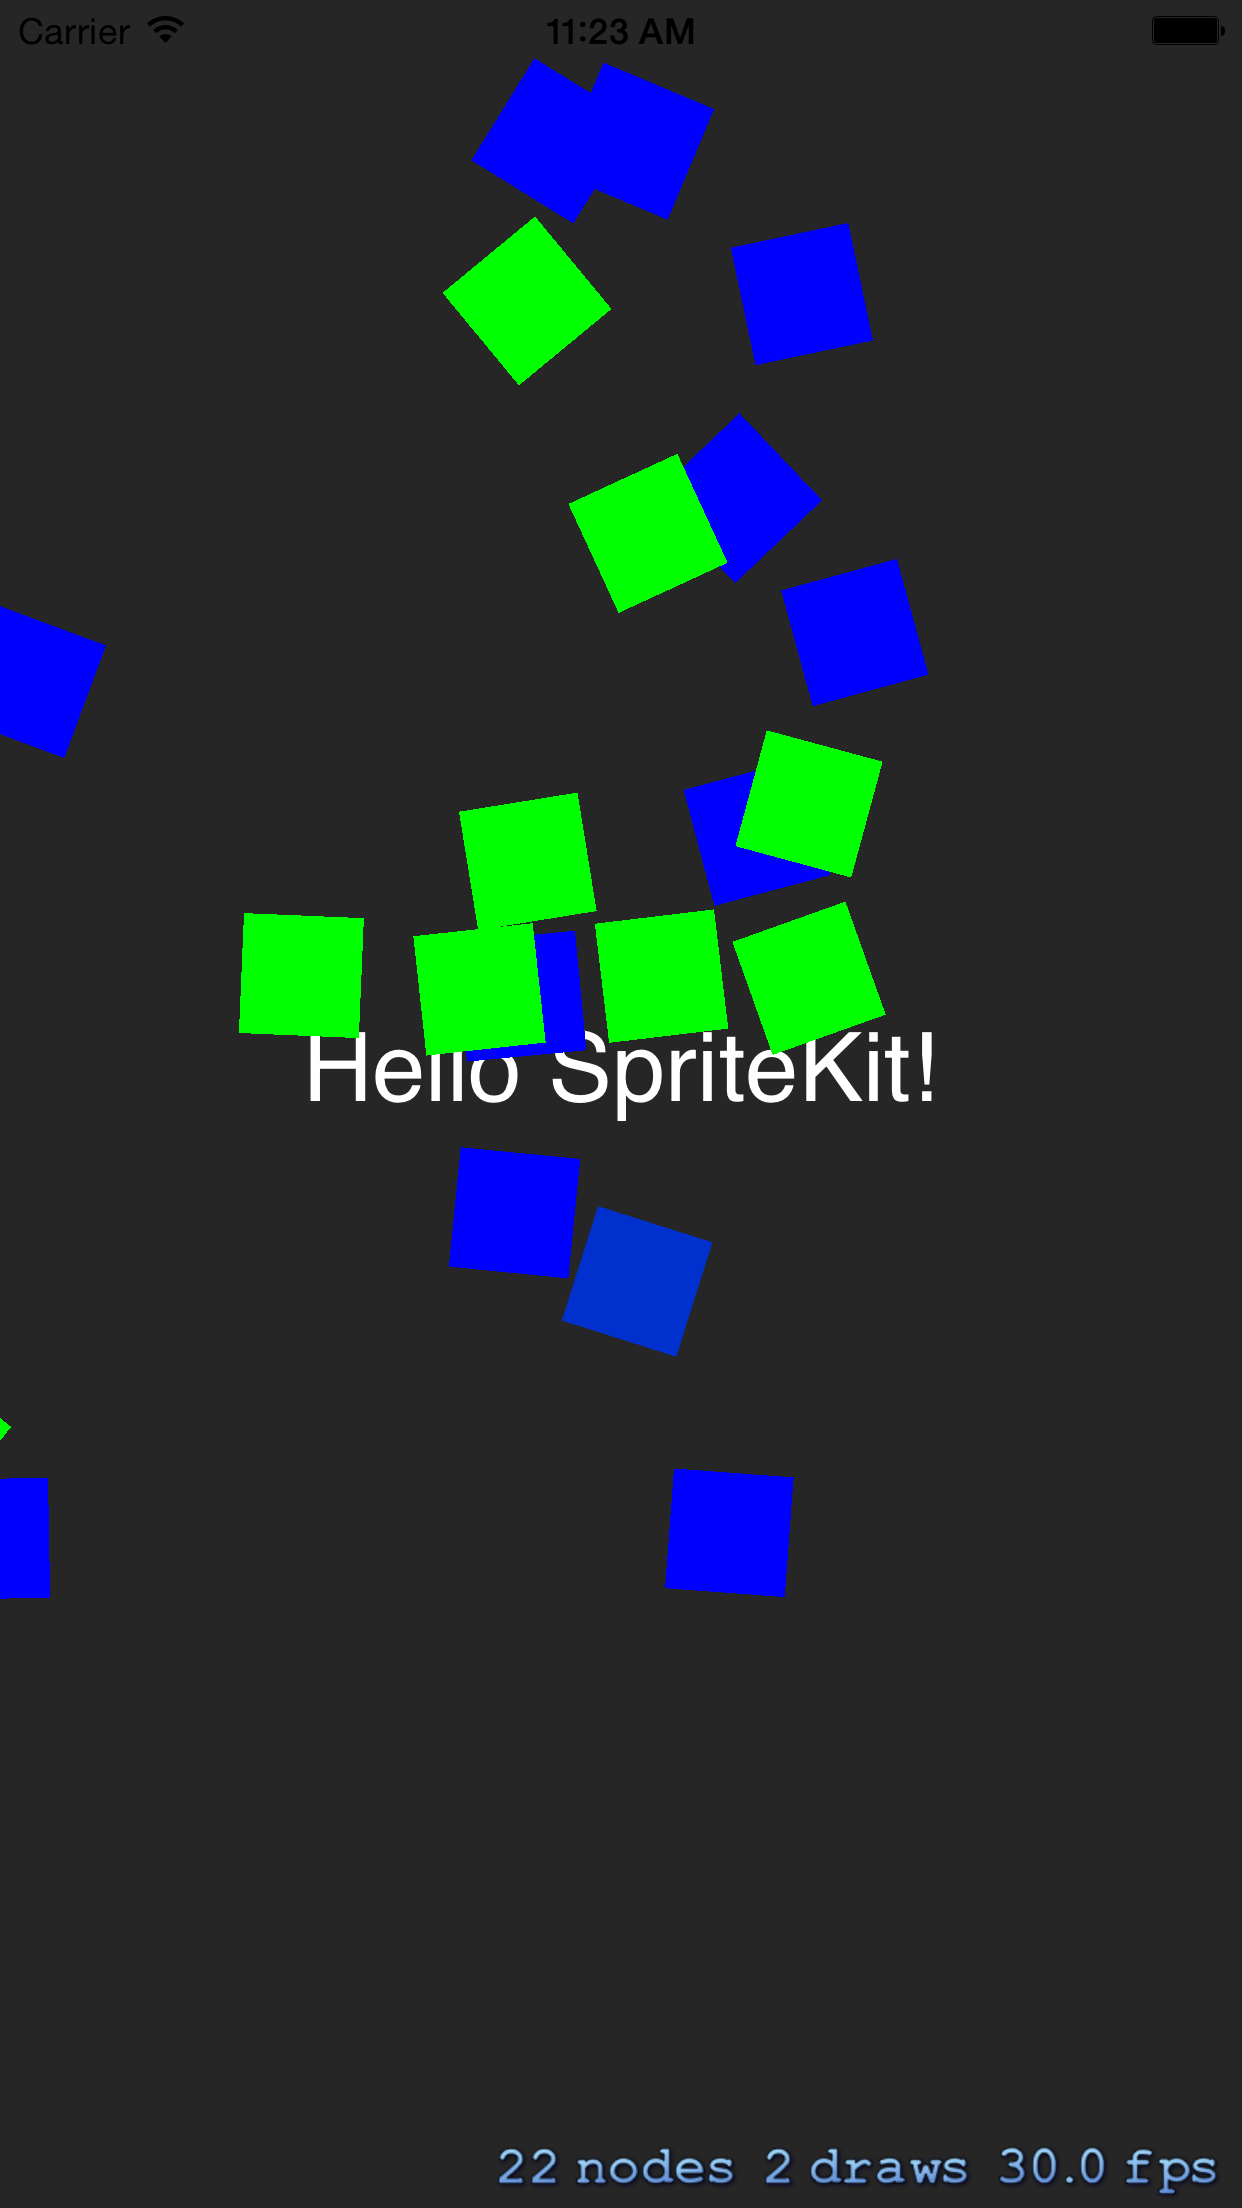 SpriteKitFromScratch running in iOS Simulator